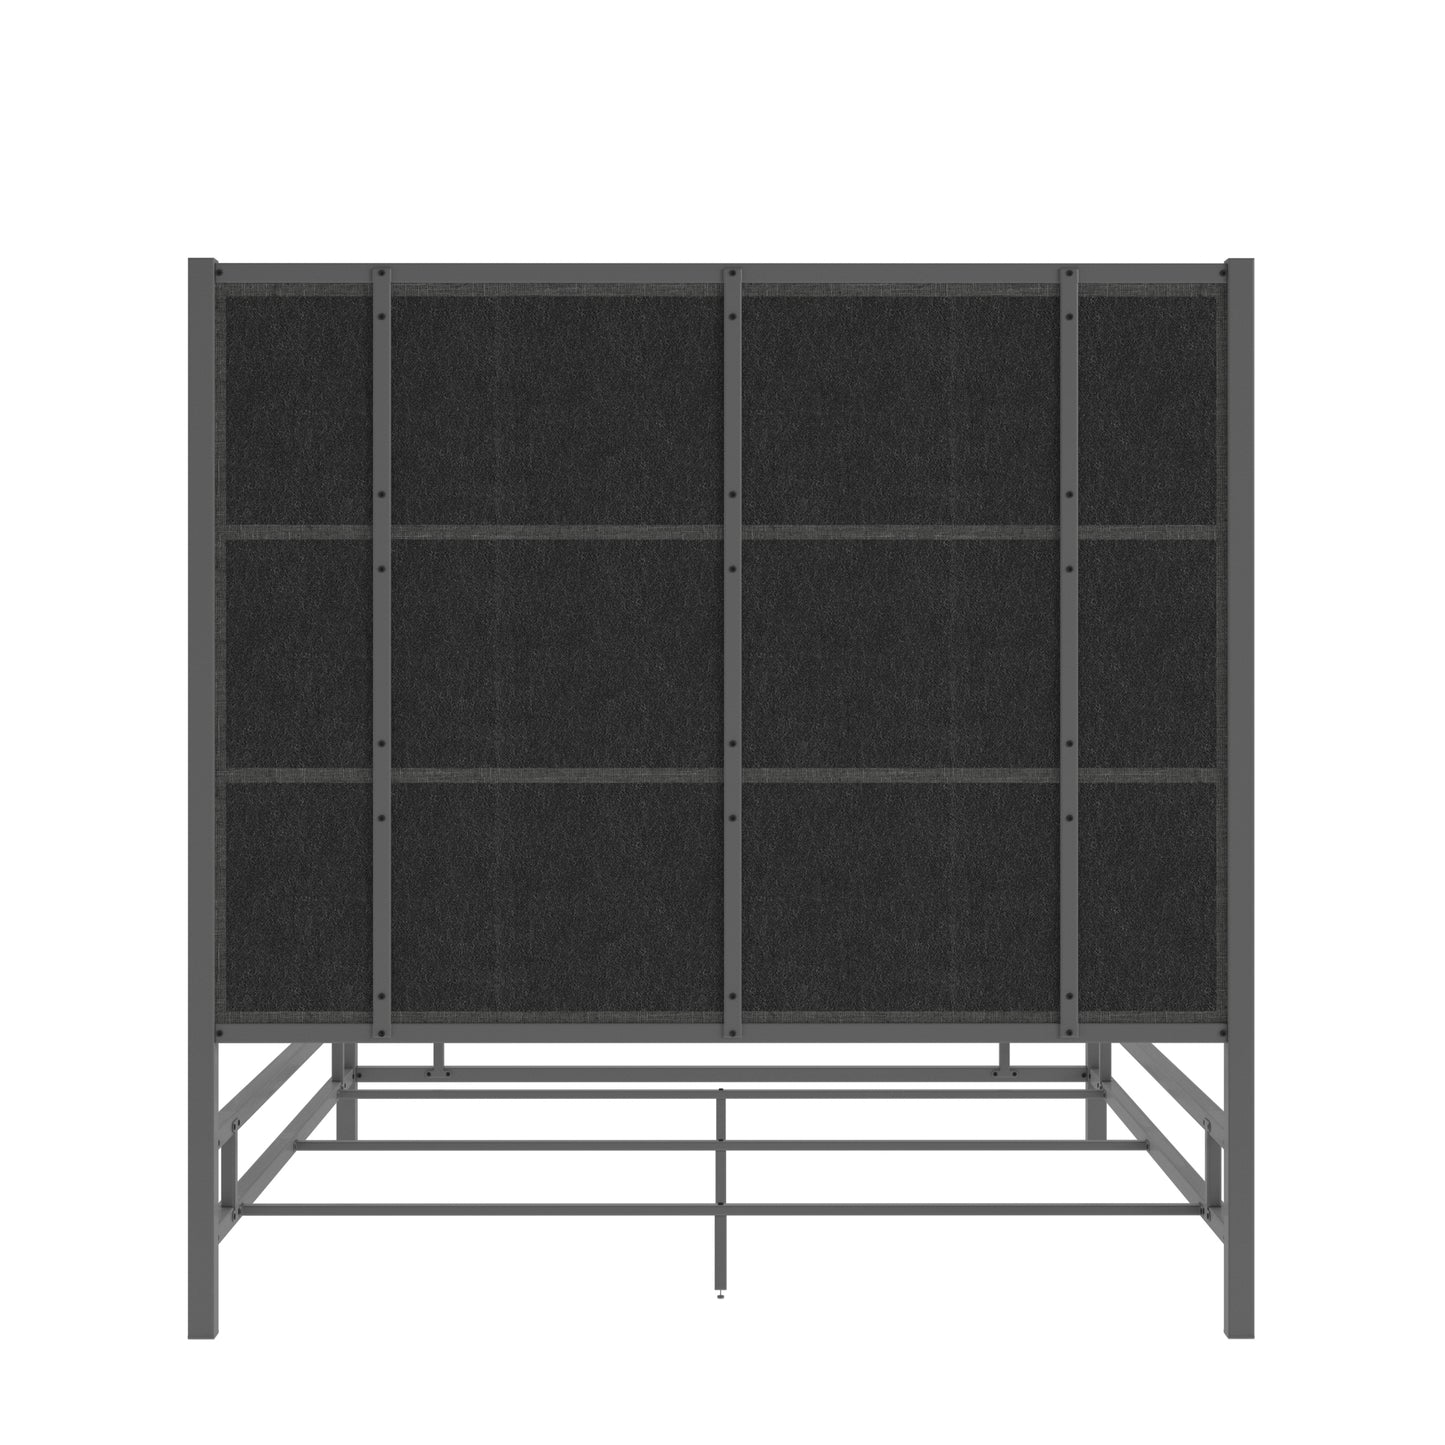 Metal Canopy Bed with Linen Panel Headboard - Dark Grey Linen, Black Nickel Finish, King Size